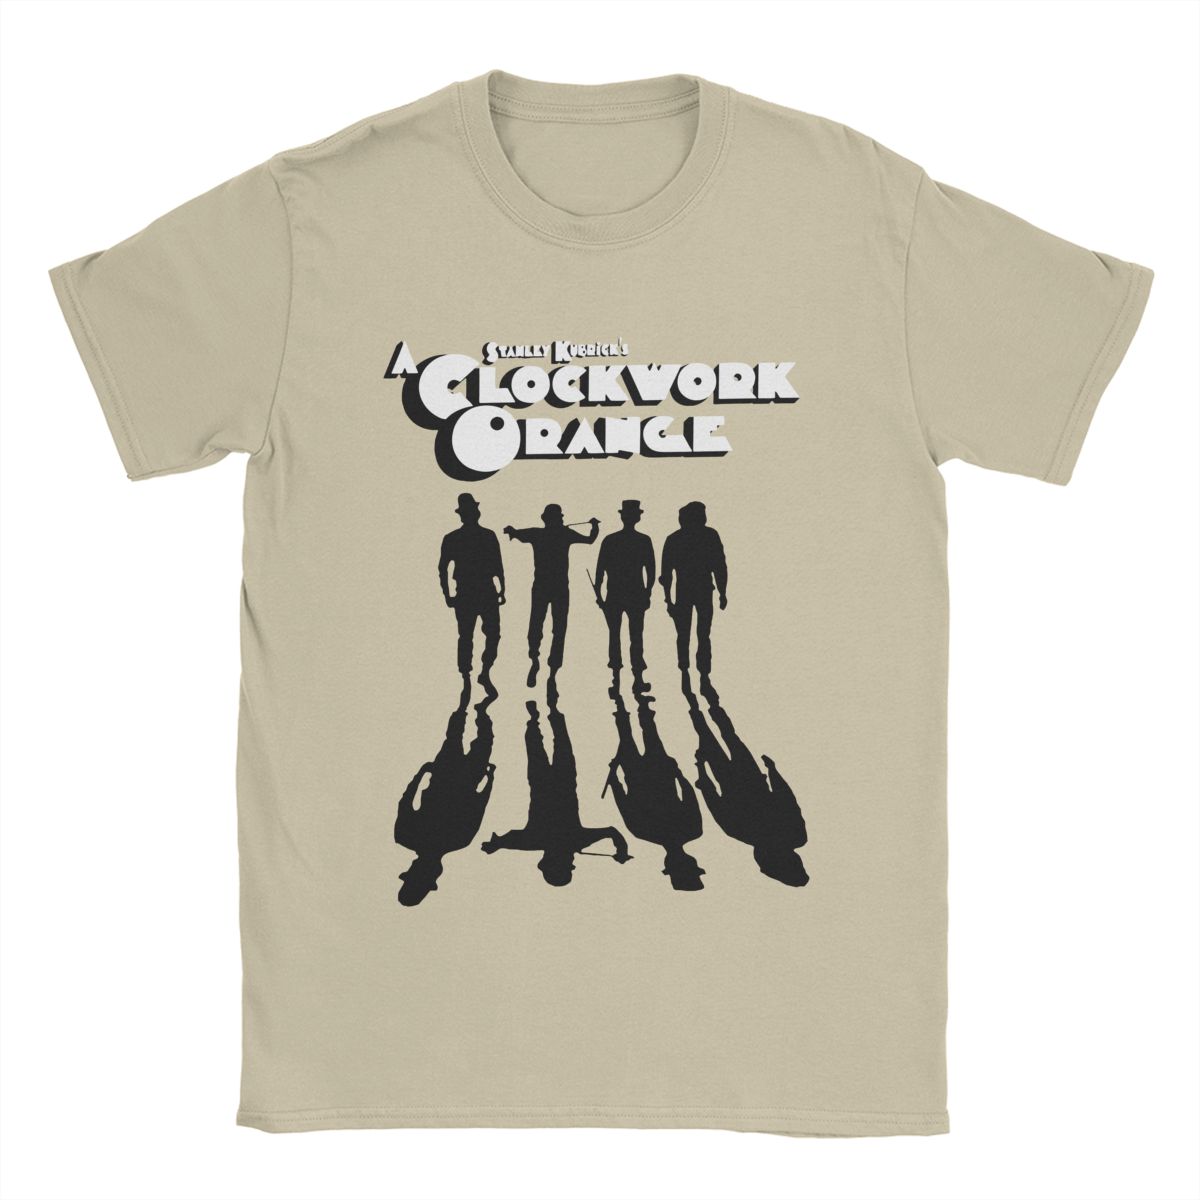 A Clockwork Orange - 100% Cotton T-Shirt - Stanley Kubrick - Sci-Fi Fan Garment-Khaki-S-